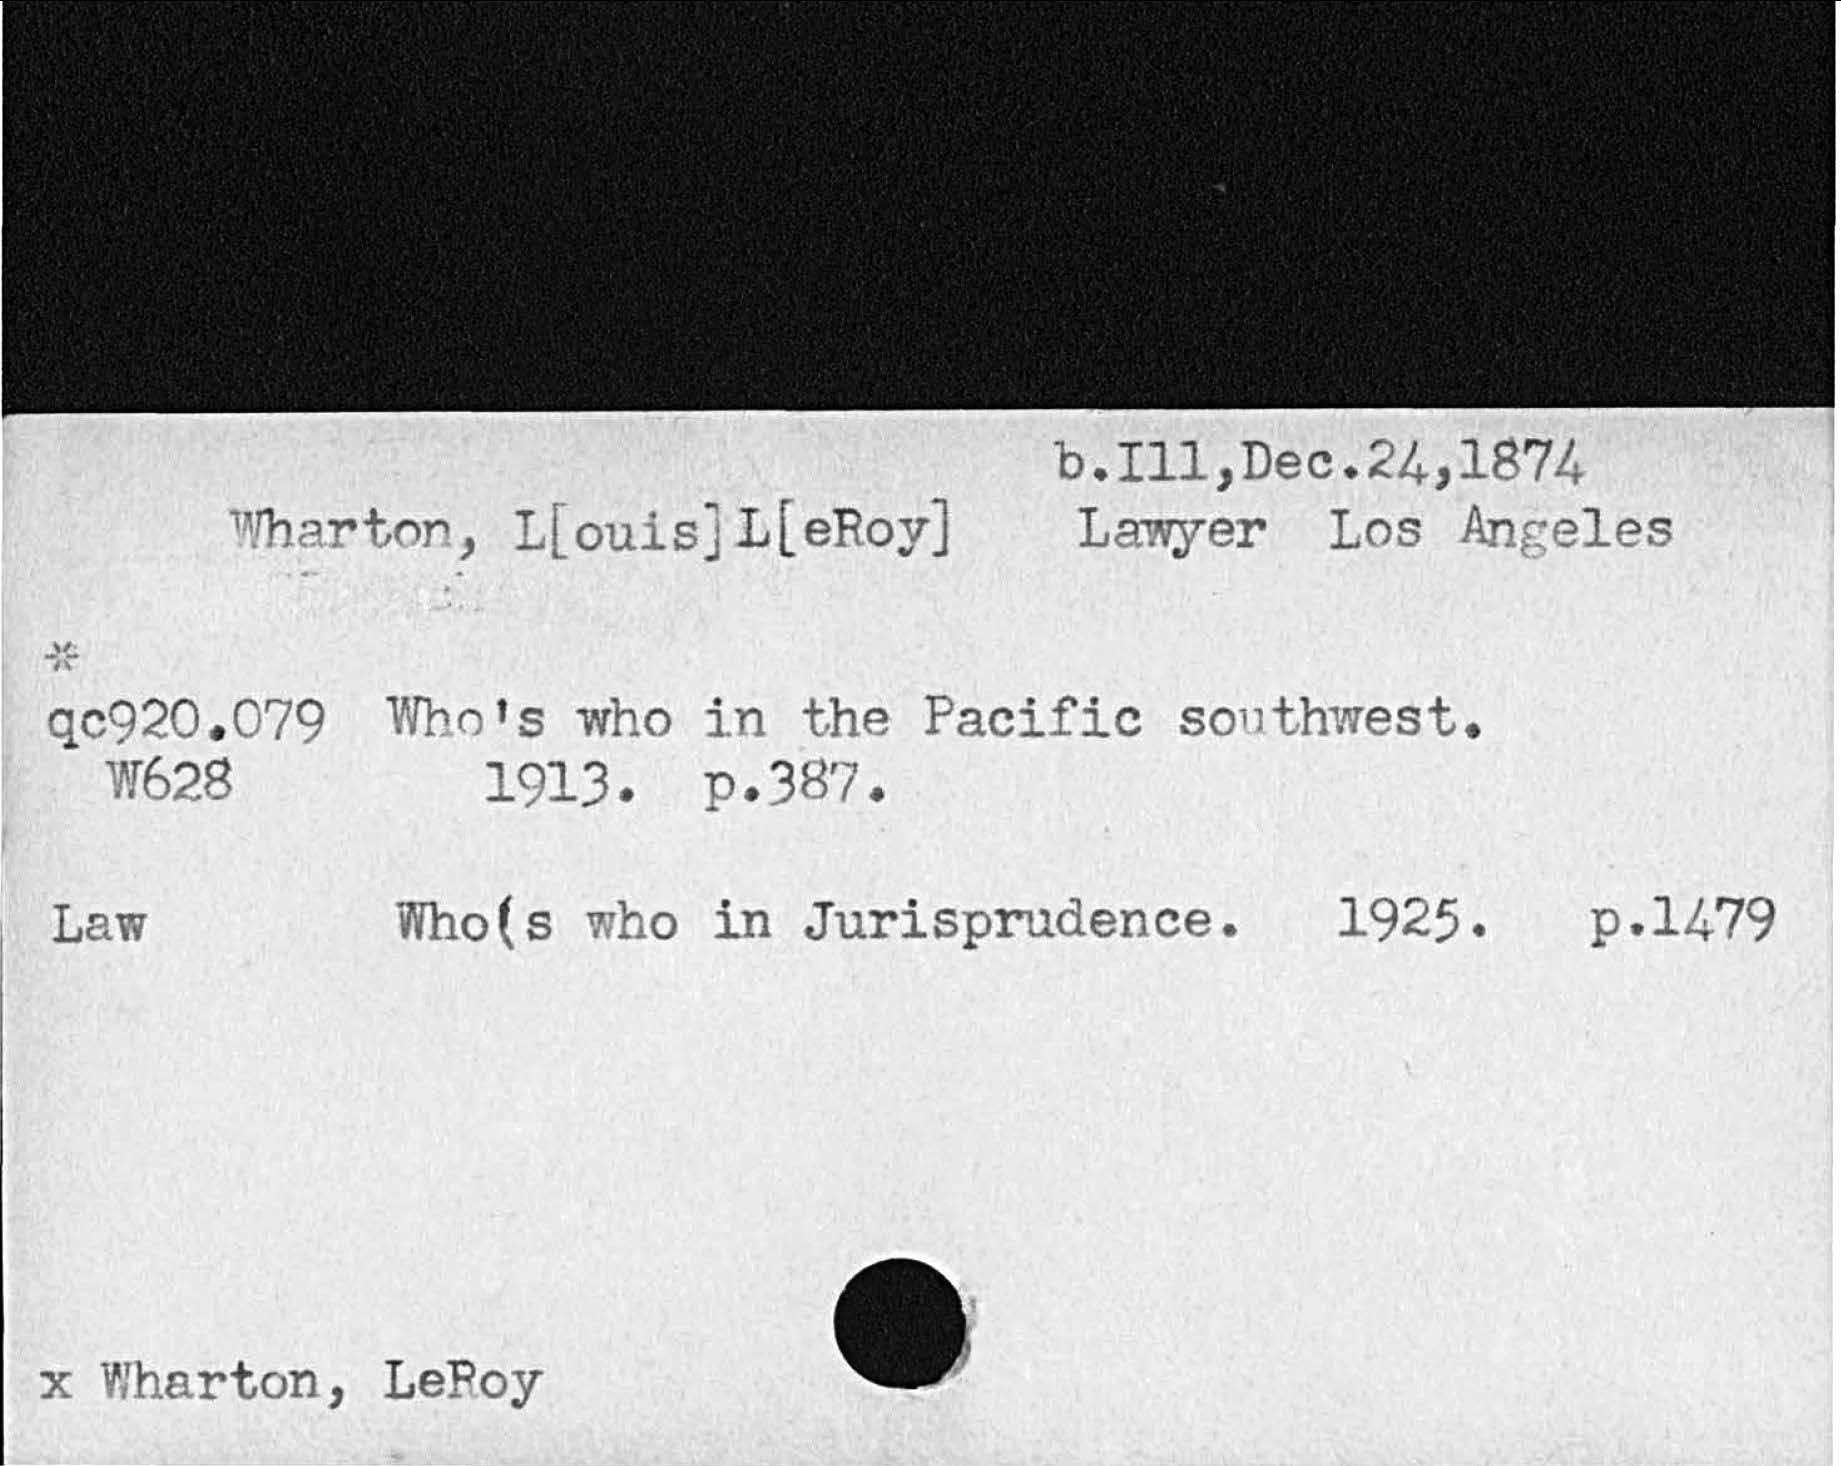 b. Ill, Dec. 24, 1874Wharton Louis LeRoy Lawyer Los AngelesWho’s who in the Pacific southwest.p. 38?Law Who’s who in Jurisprudence. 1925 p. 1479x Wharton, LeRoy   qc920. 079  W62B 1913